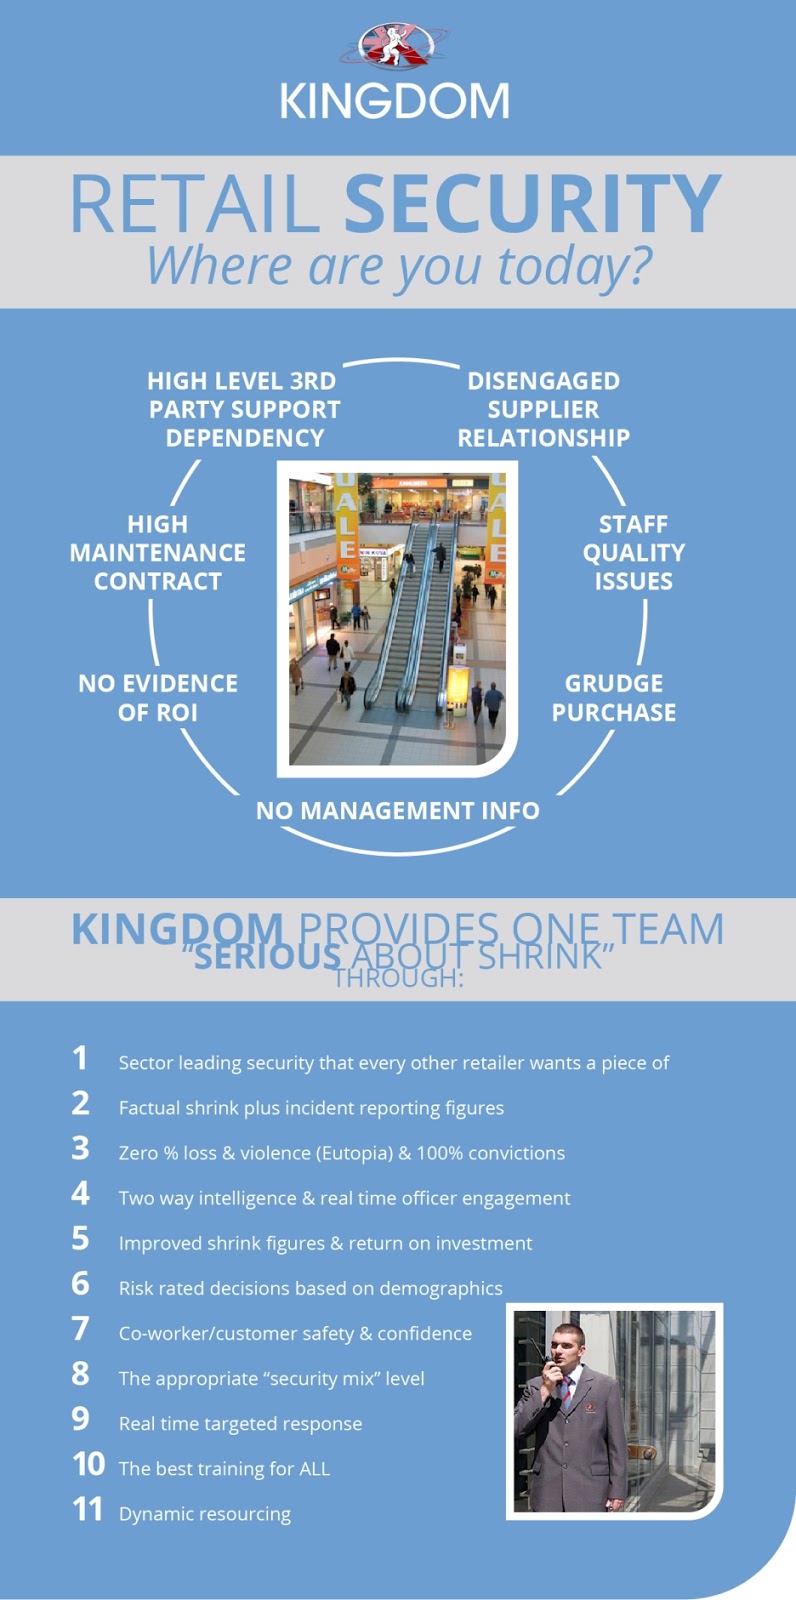 Kingdom Retail Security Services